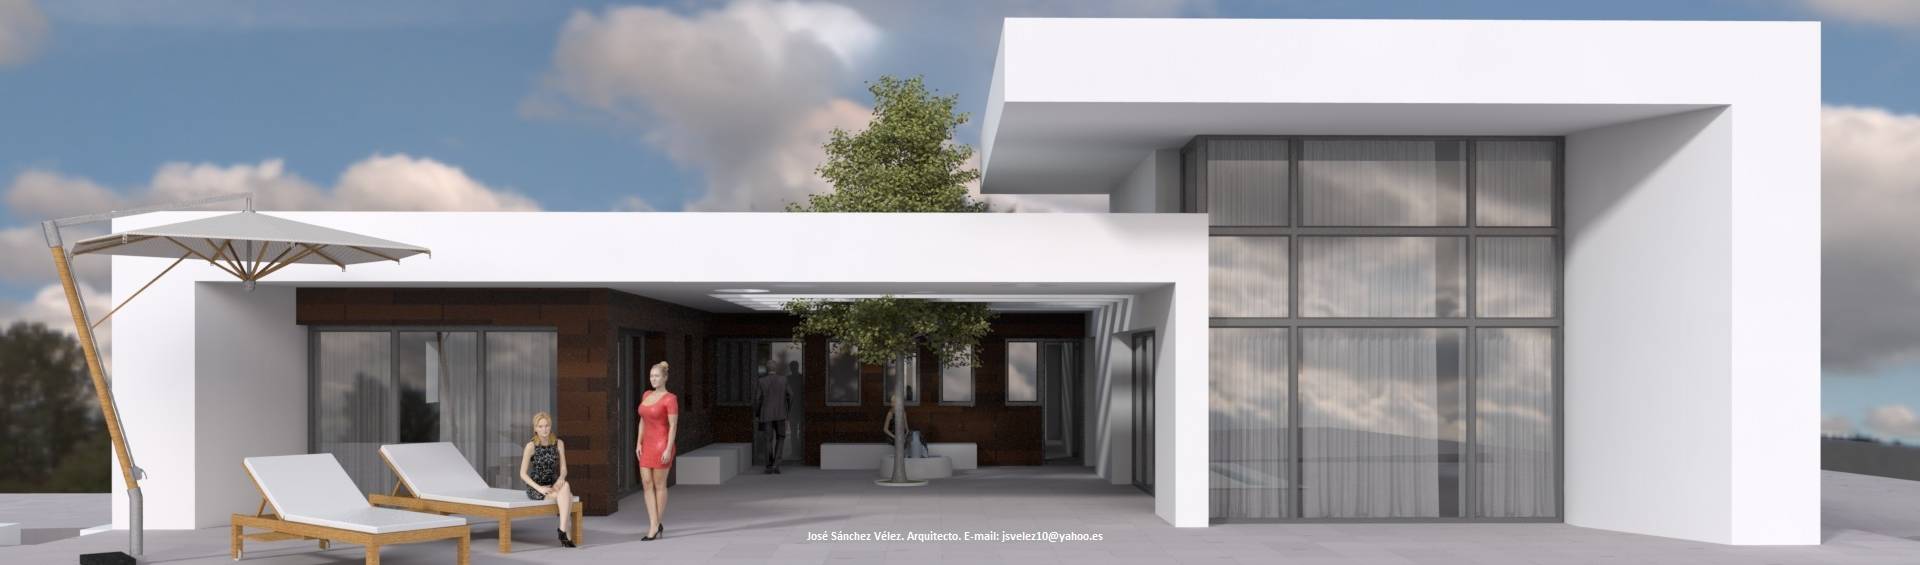 DYOV STUDIO Arquitectura, Concepto Passivhaus Mediterraneo 653 77 38 06